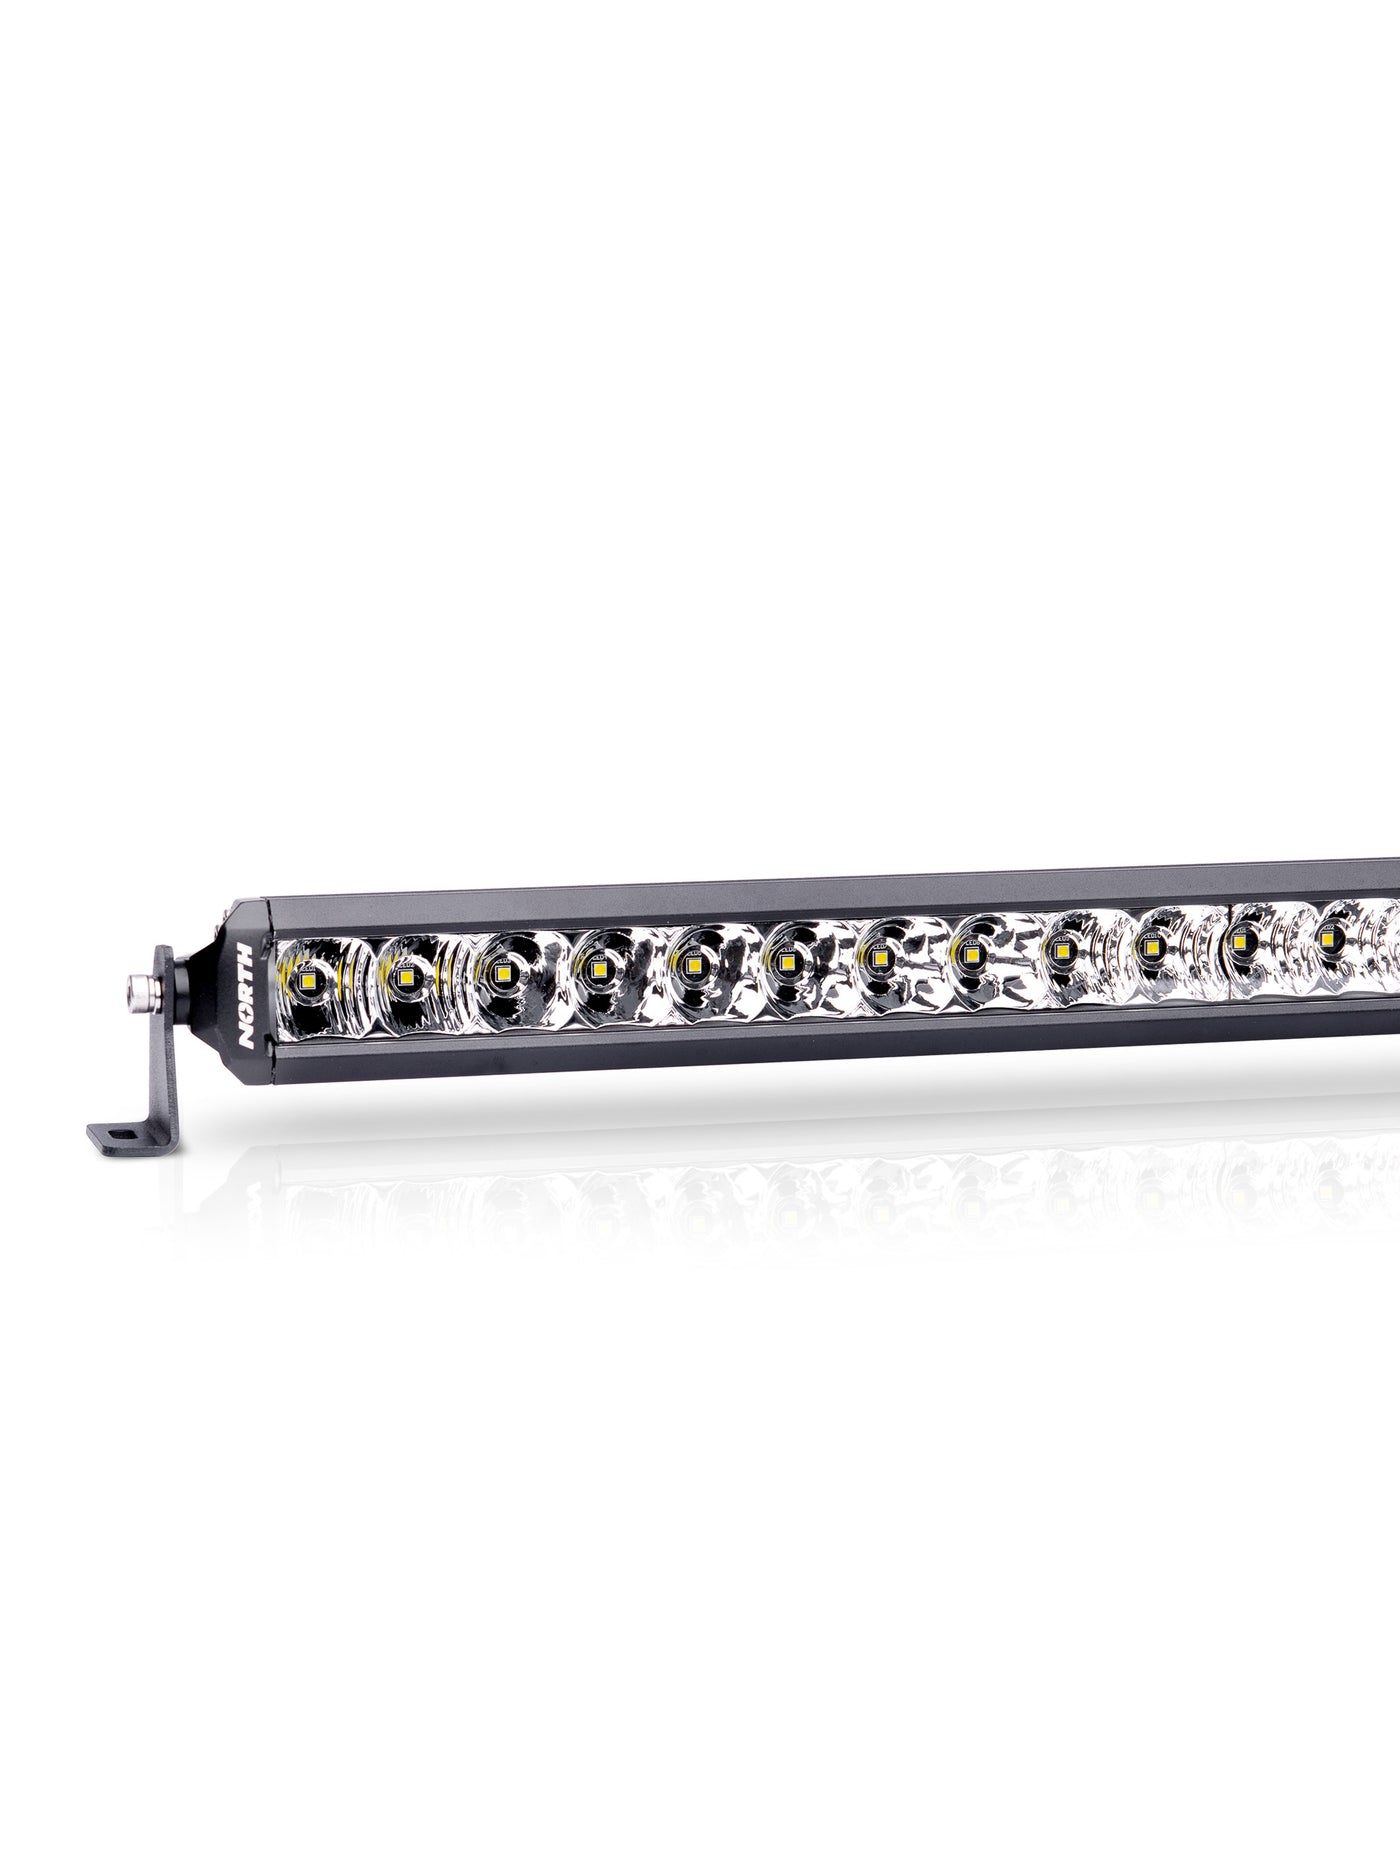 40" Single Row LED Light Bar - Spot/Flood Beam Combo - North Lights